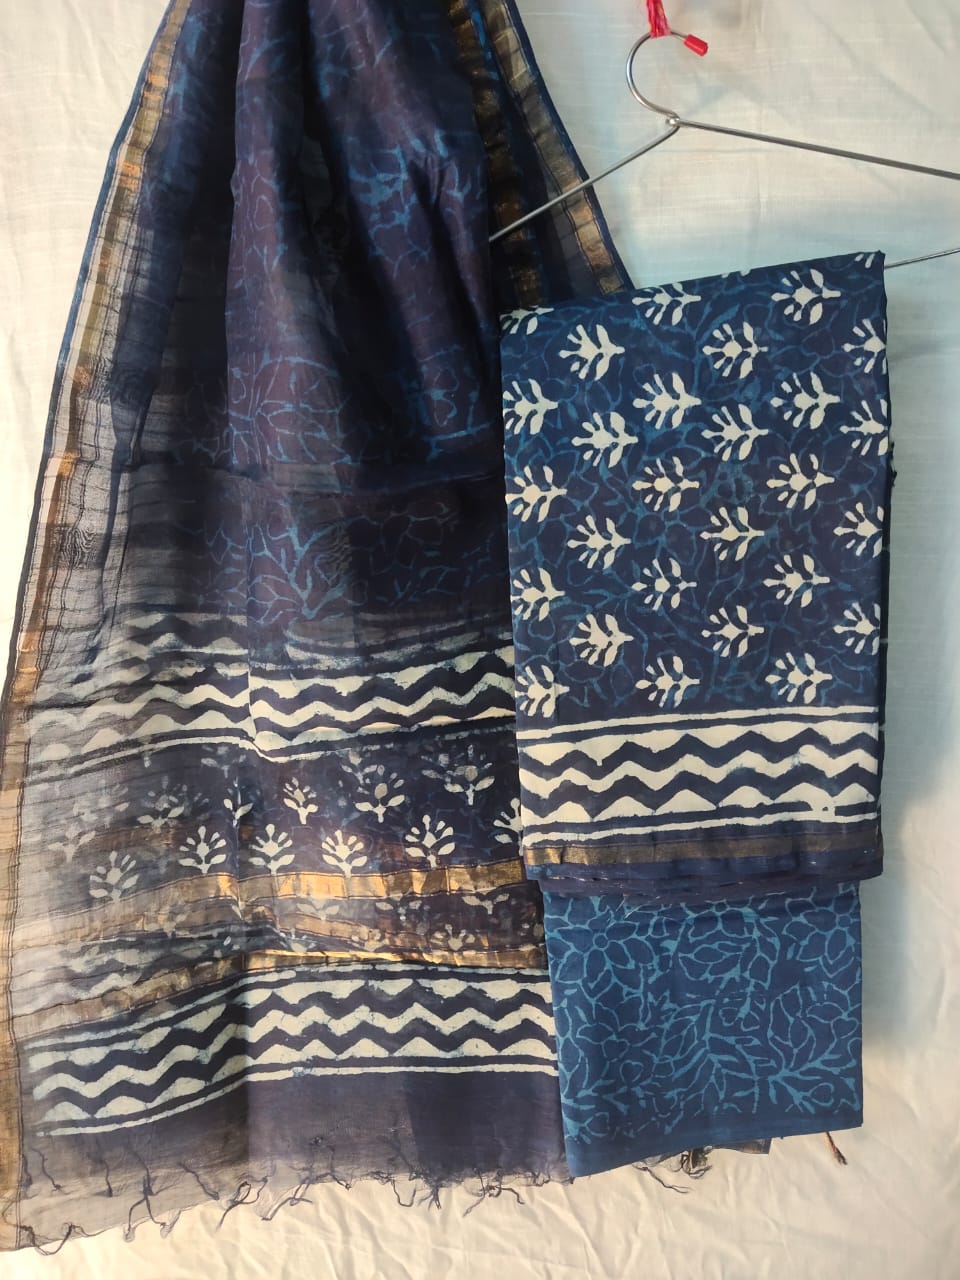 Indigo Chanderi Silk Top & Dupatta With Cotton Bottom - HandBlock Printed Salwar Suit Set - JBXCS26